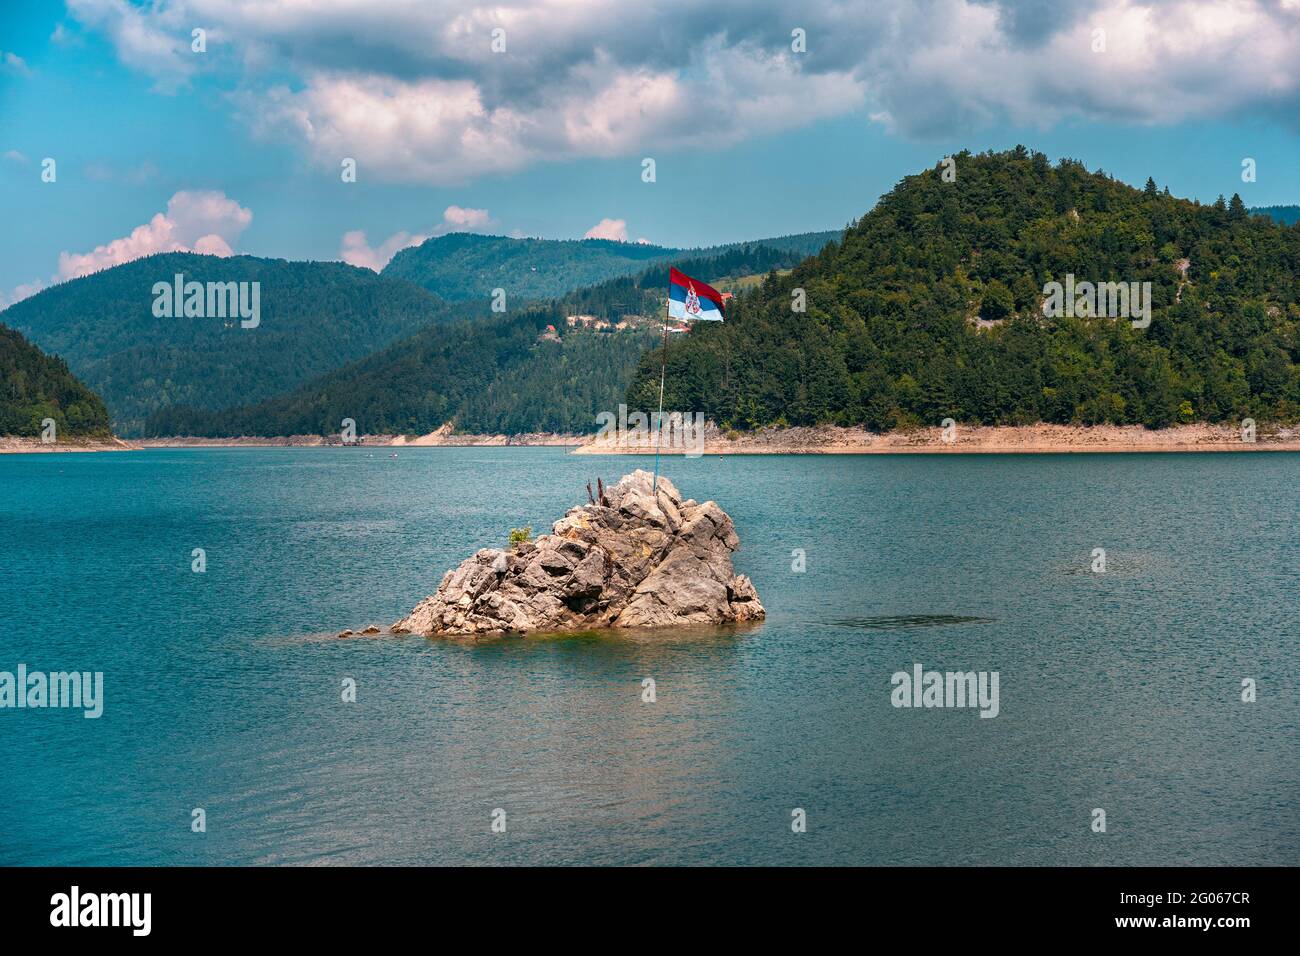 Serbian flag waving on a pole at a lonley island in the middle of Zaovine lake, Tara mountain Stock Photo